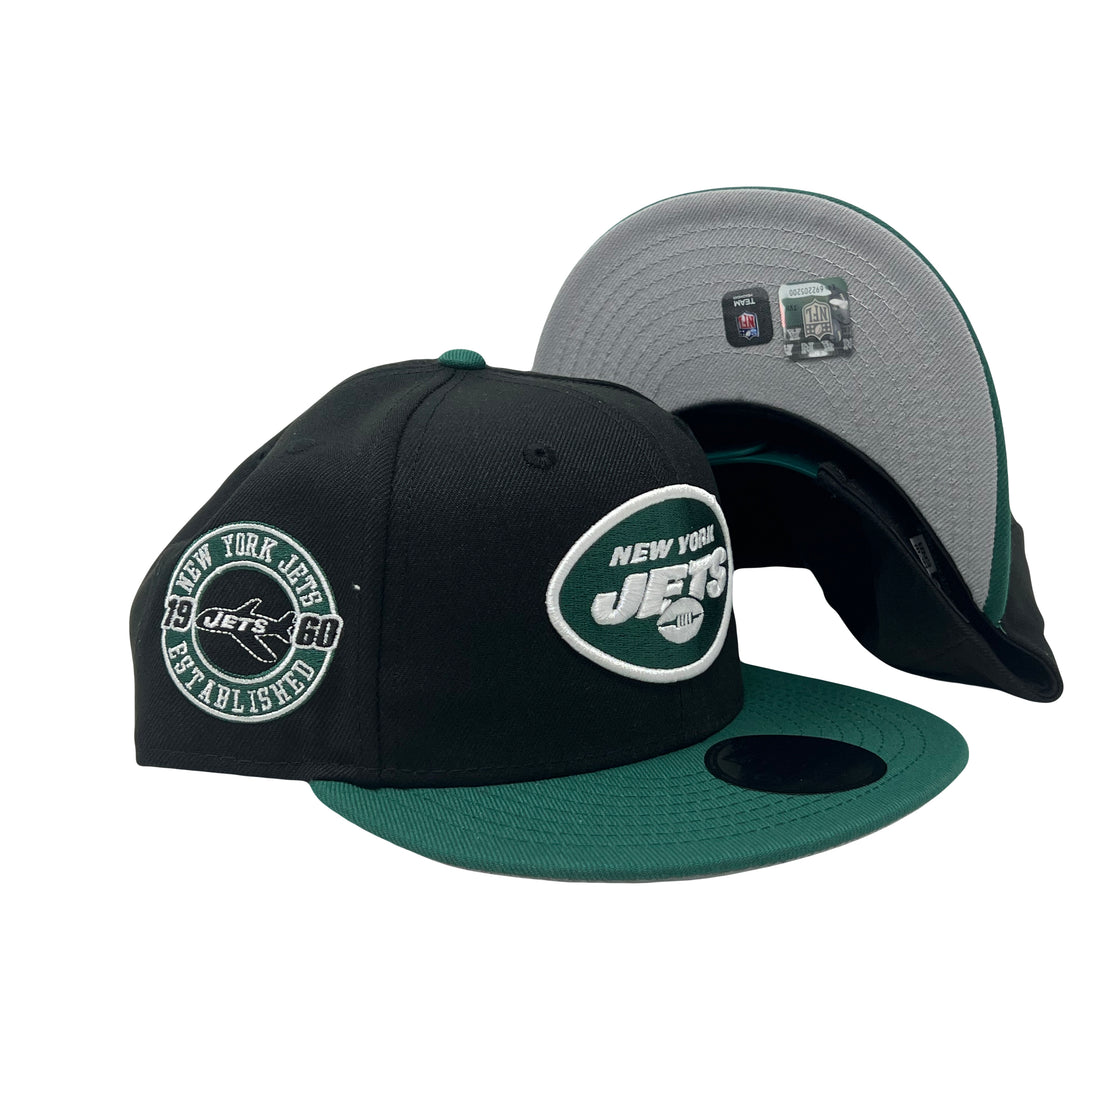 New York Jets 1960 Established New Era Snapback Hat